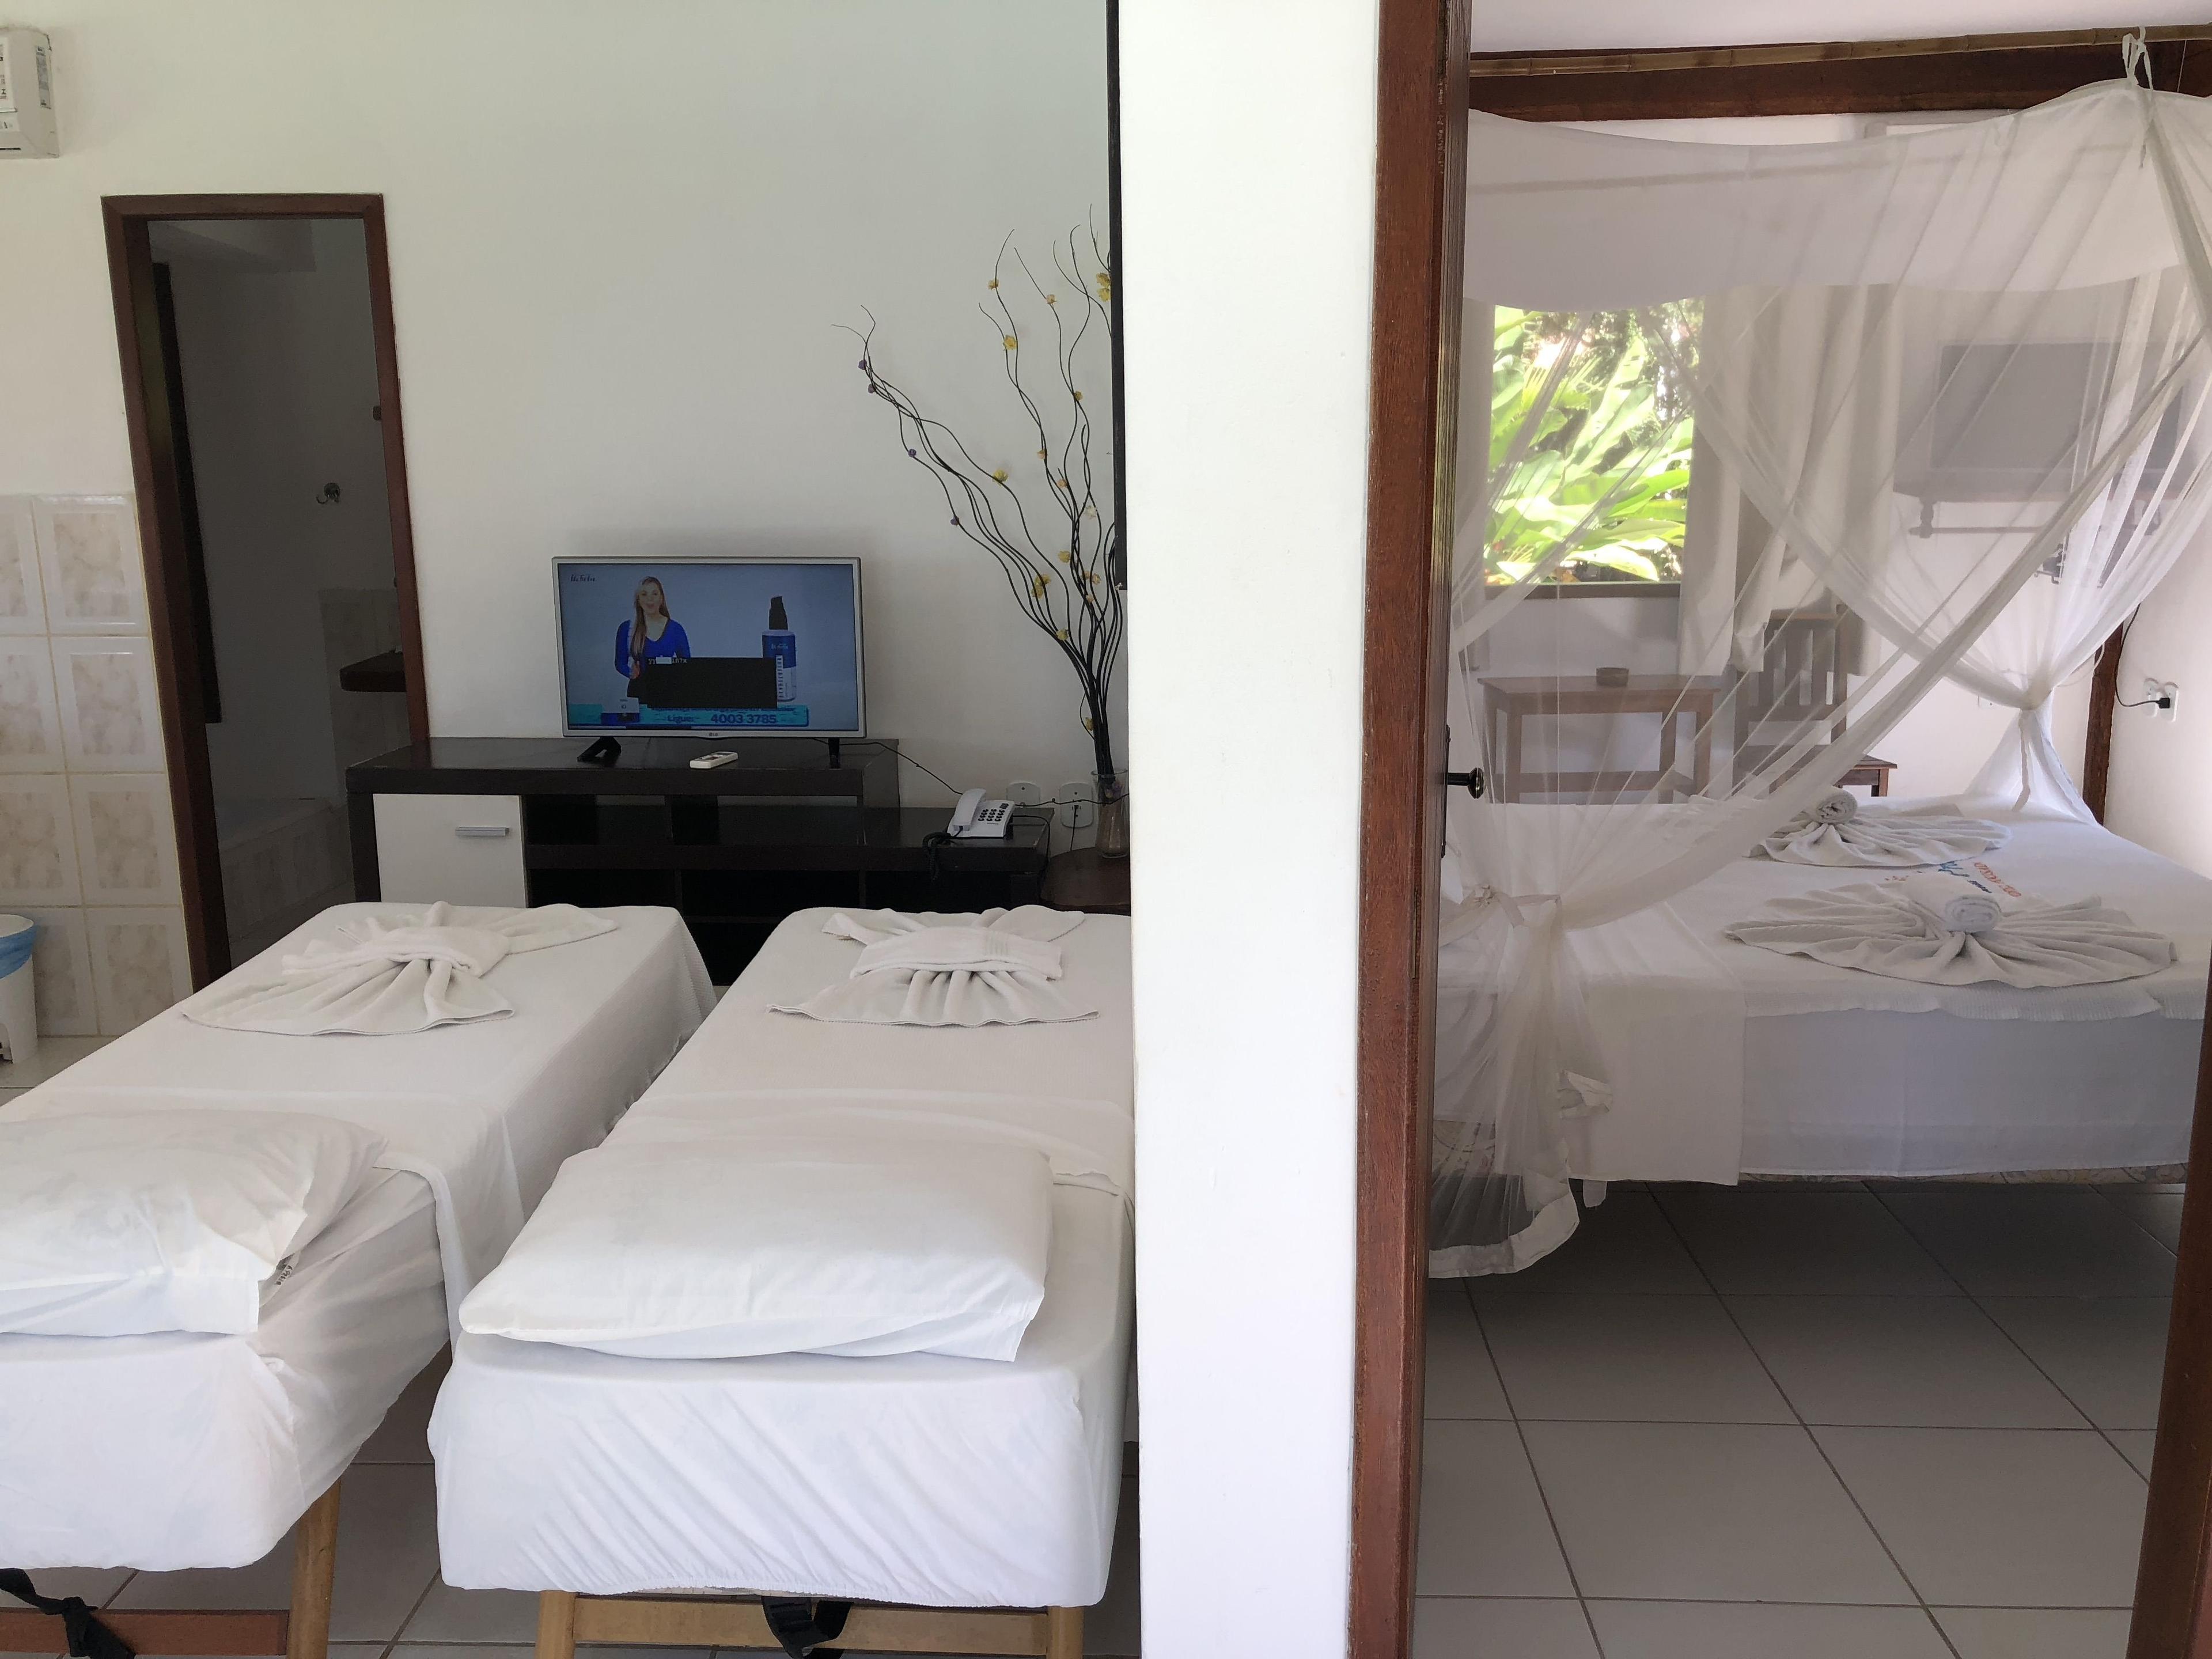 Double room with seaview, airco, t.v., wifi, minibar, varanda with hammock, shower, toilet, safe